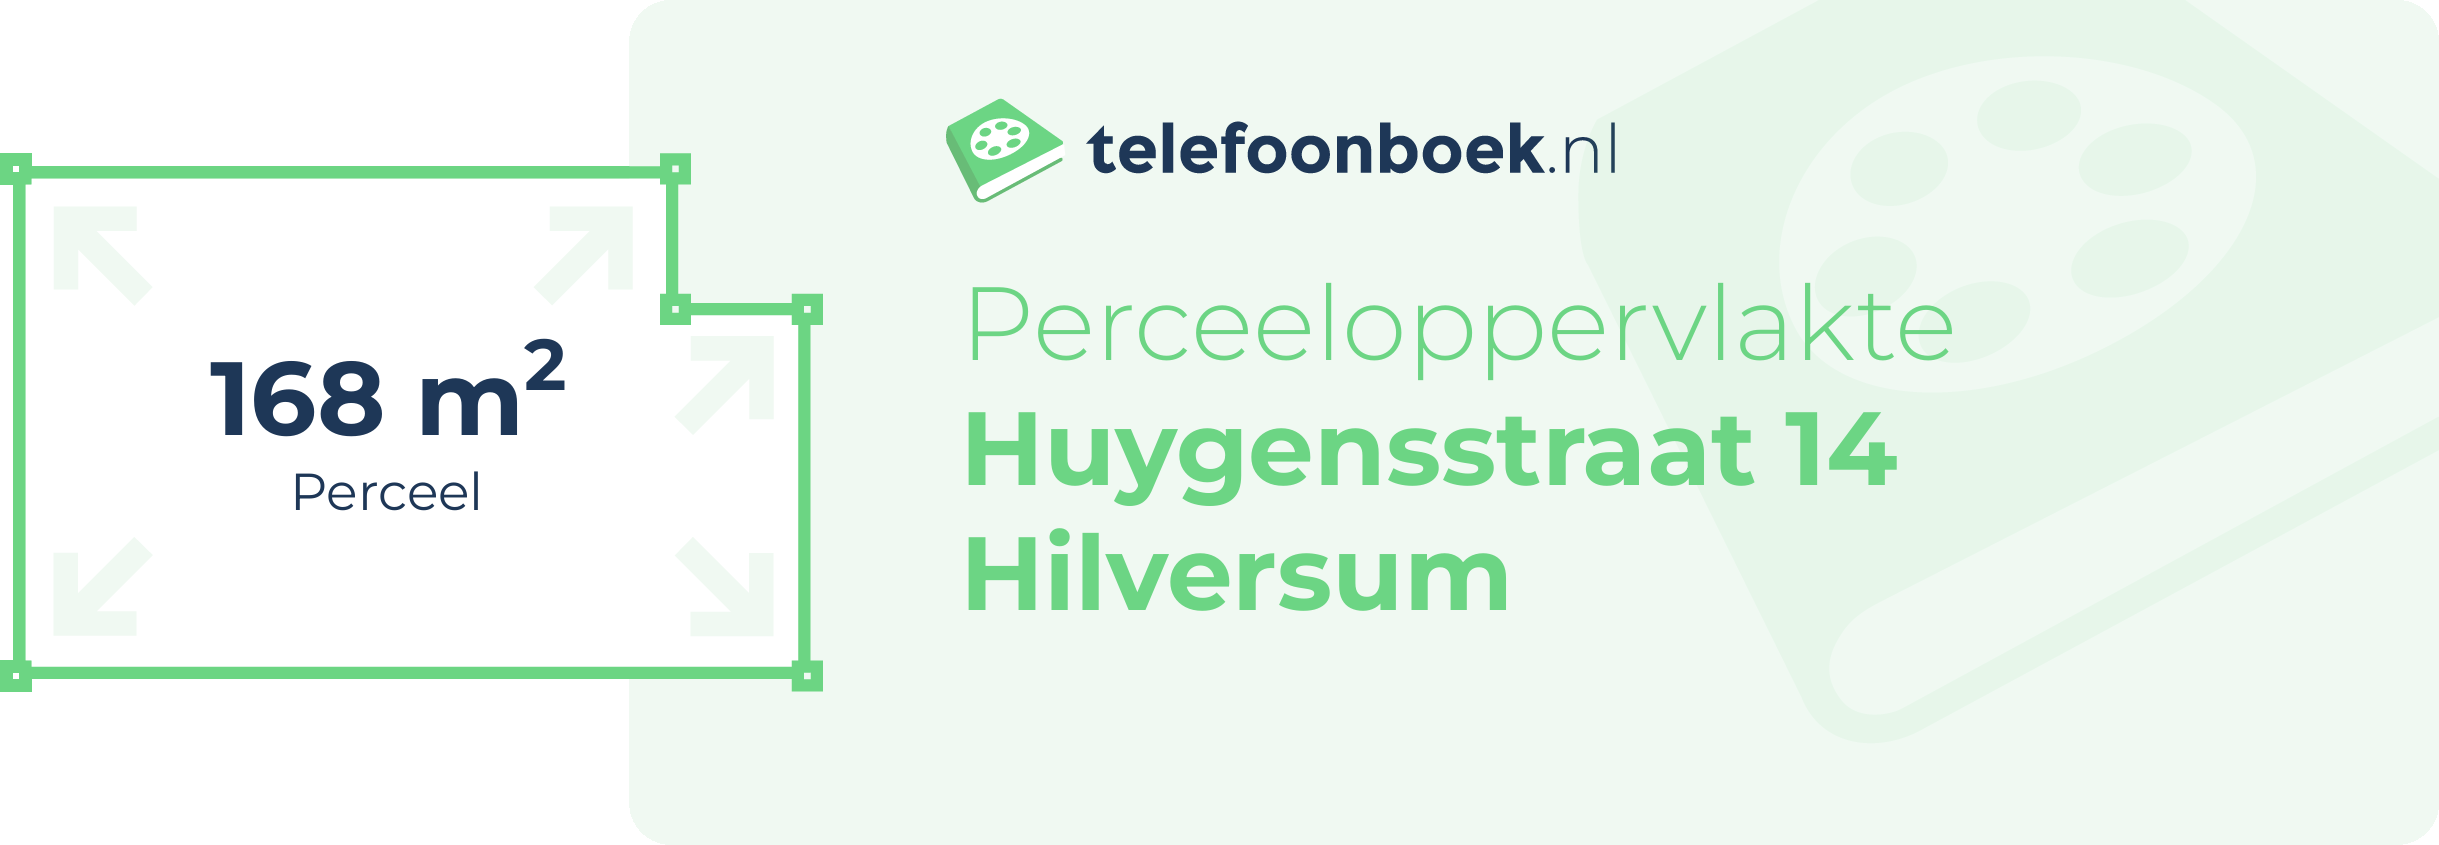 Perceeloppervlakte Huygensstraat 14 Hilversum